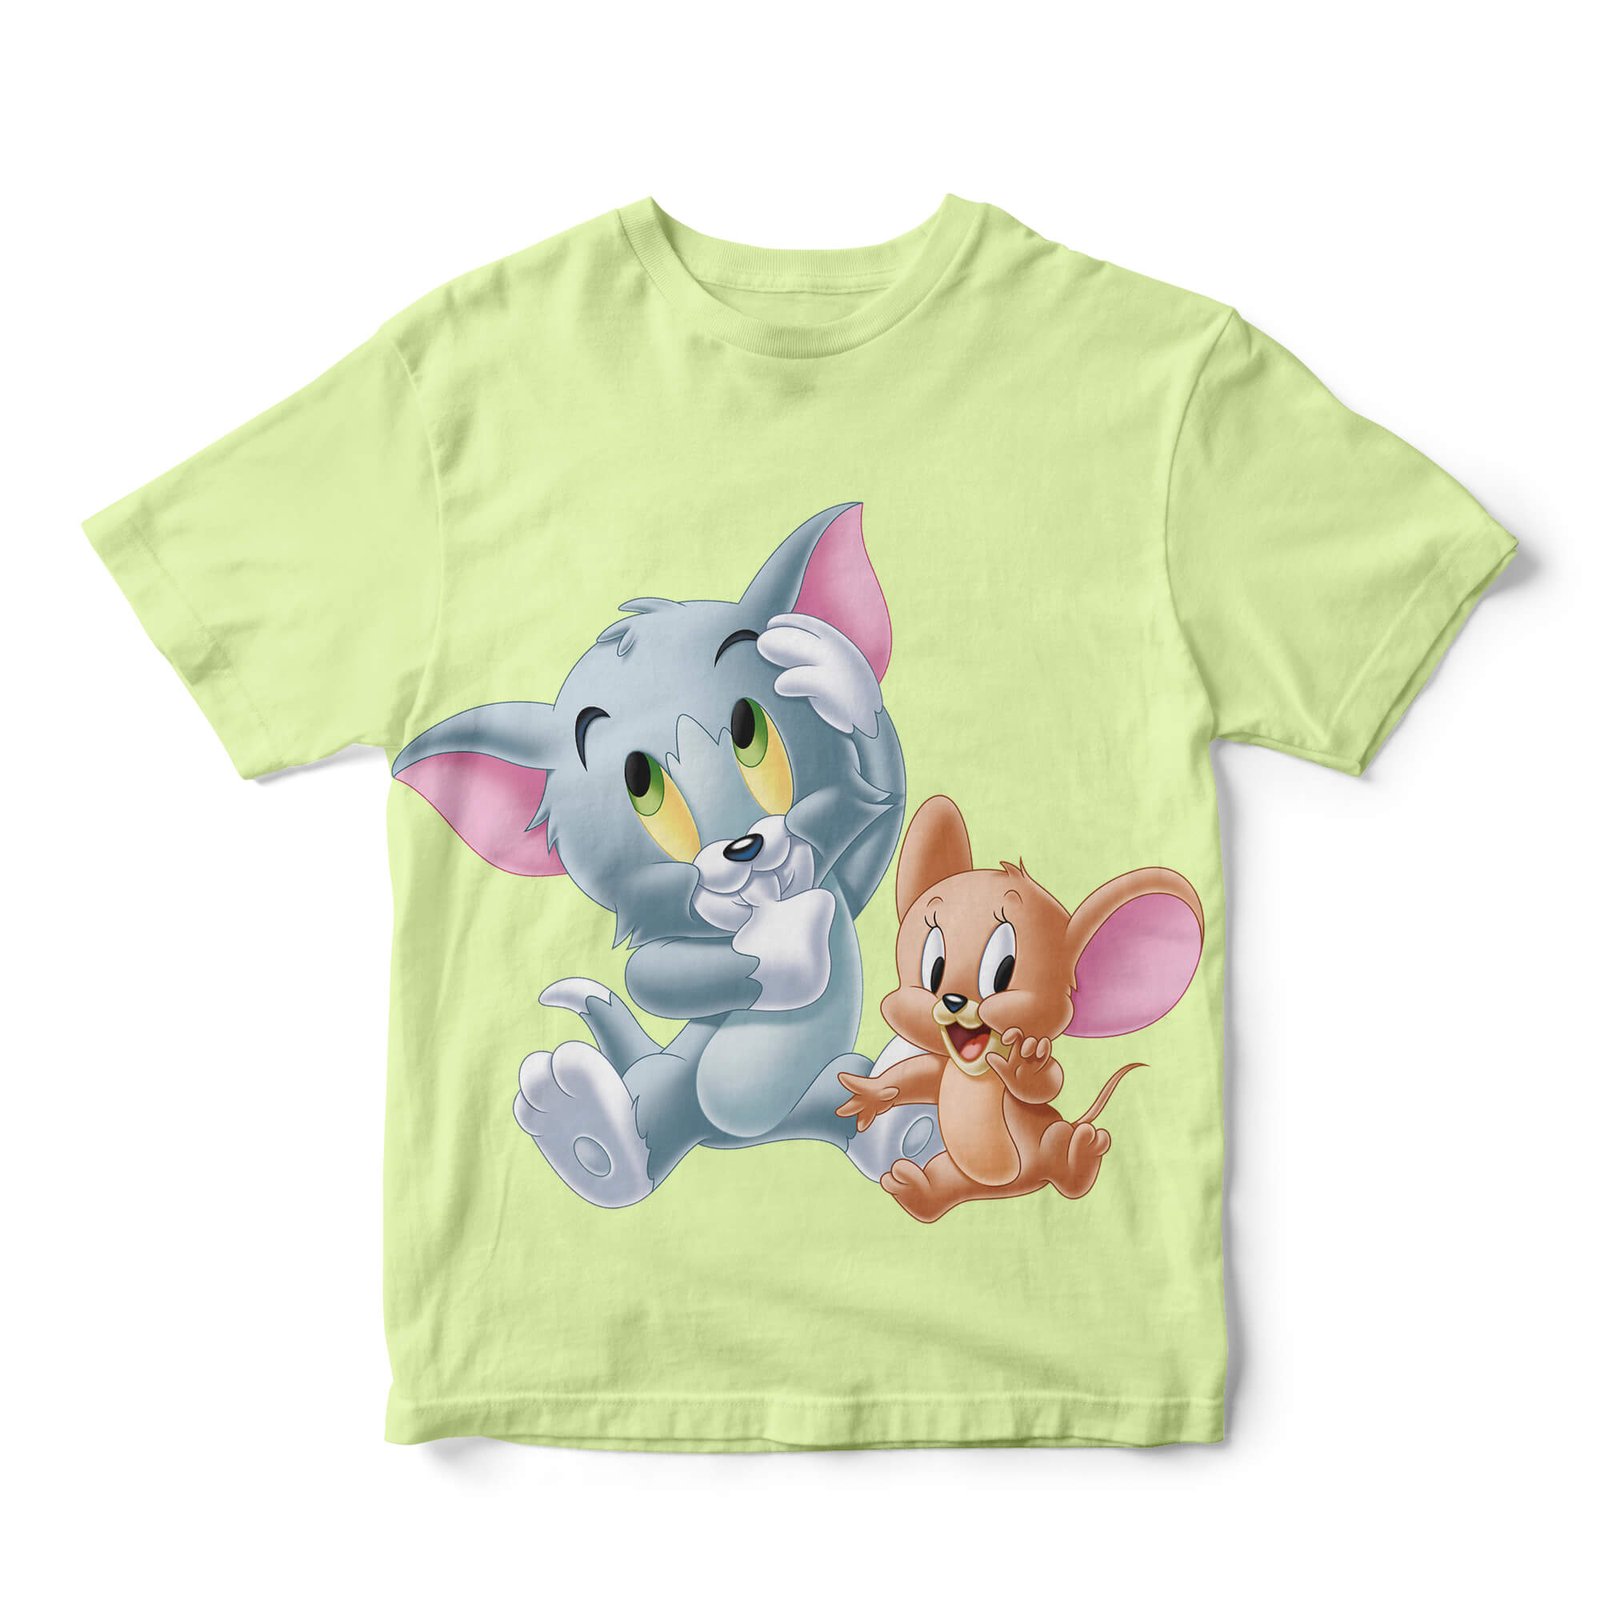 Design Free Baby T Shirt Mockup PSD Template